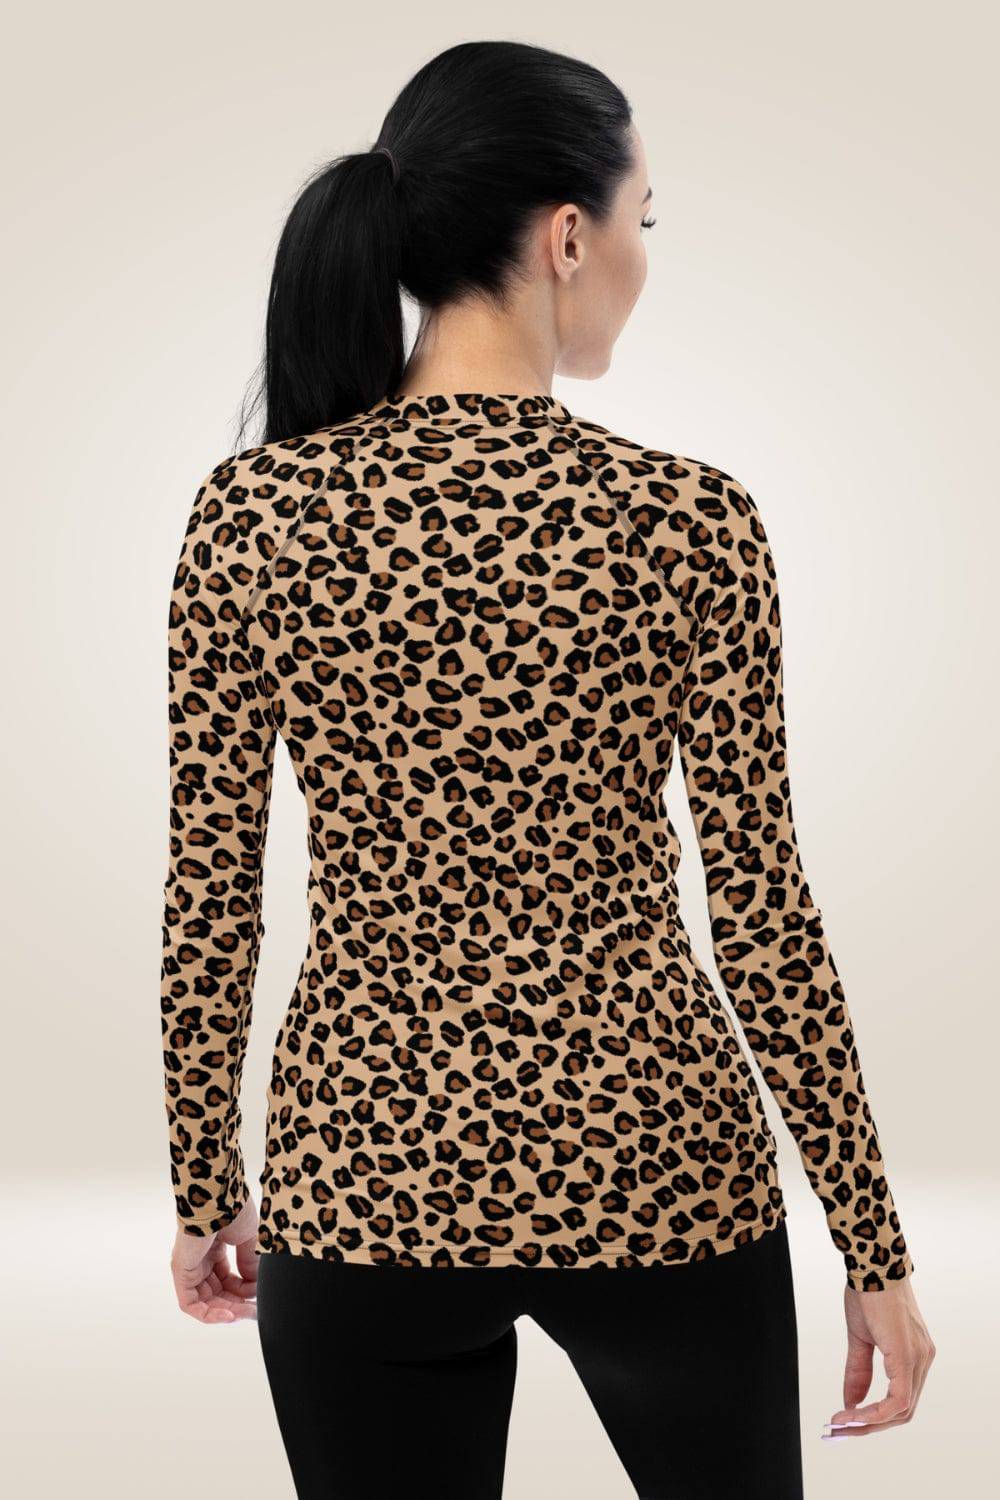 Leopard Print Rash Guard Long Sleeve Top - TGC Boutique - Top